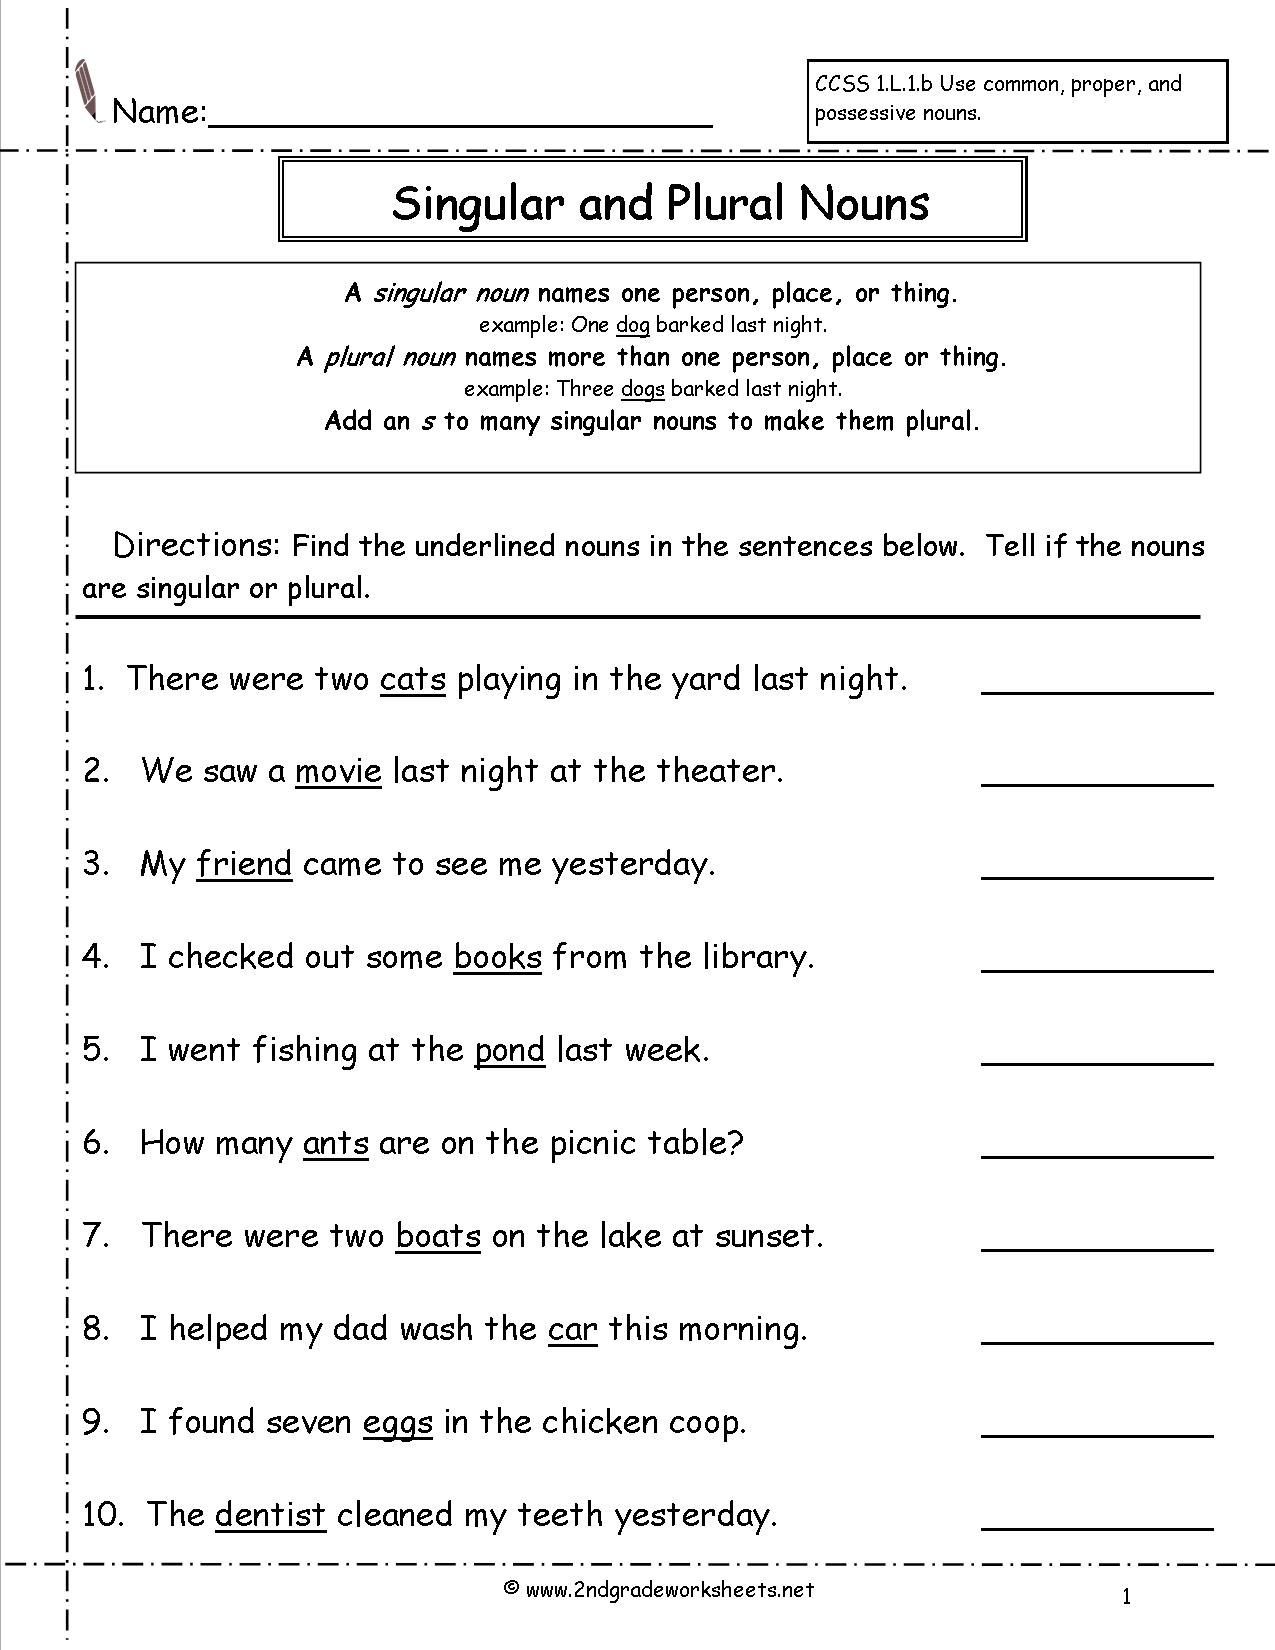 15-best-images-of-kindergarten-verb-worksheets-free-verb-worksheets-personal-pronouns